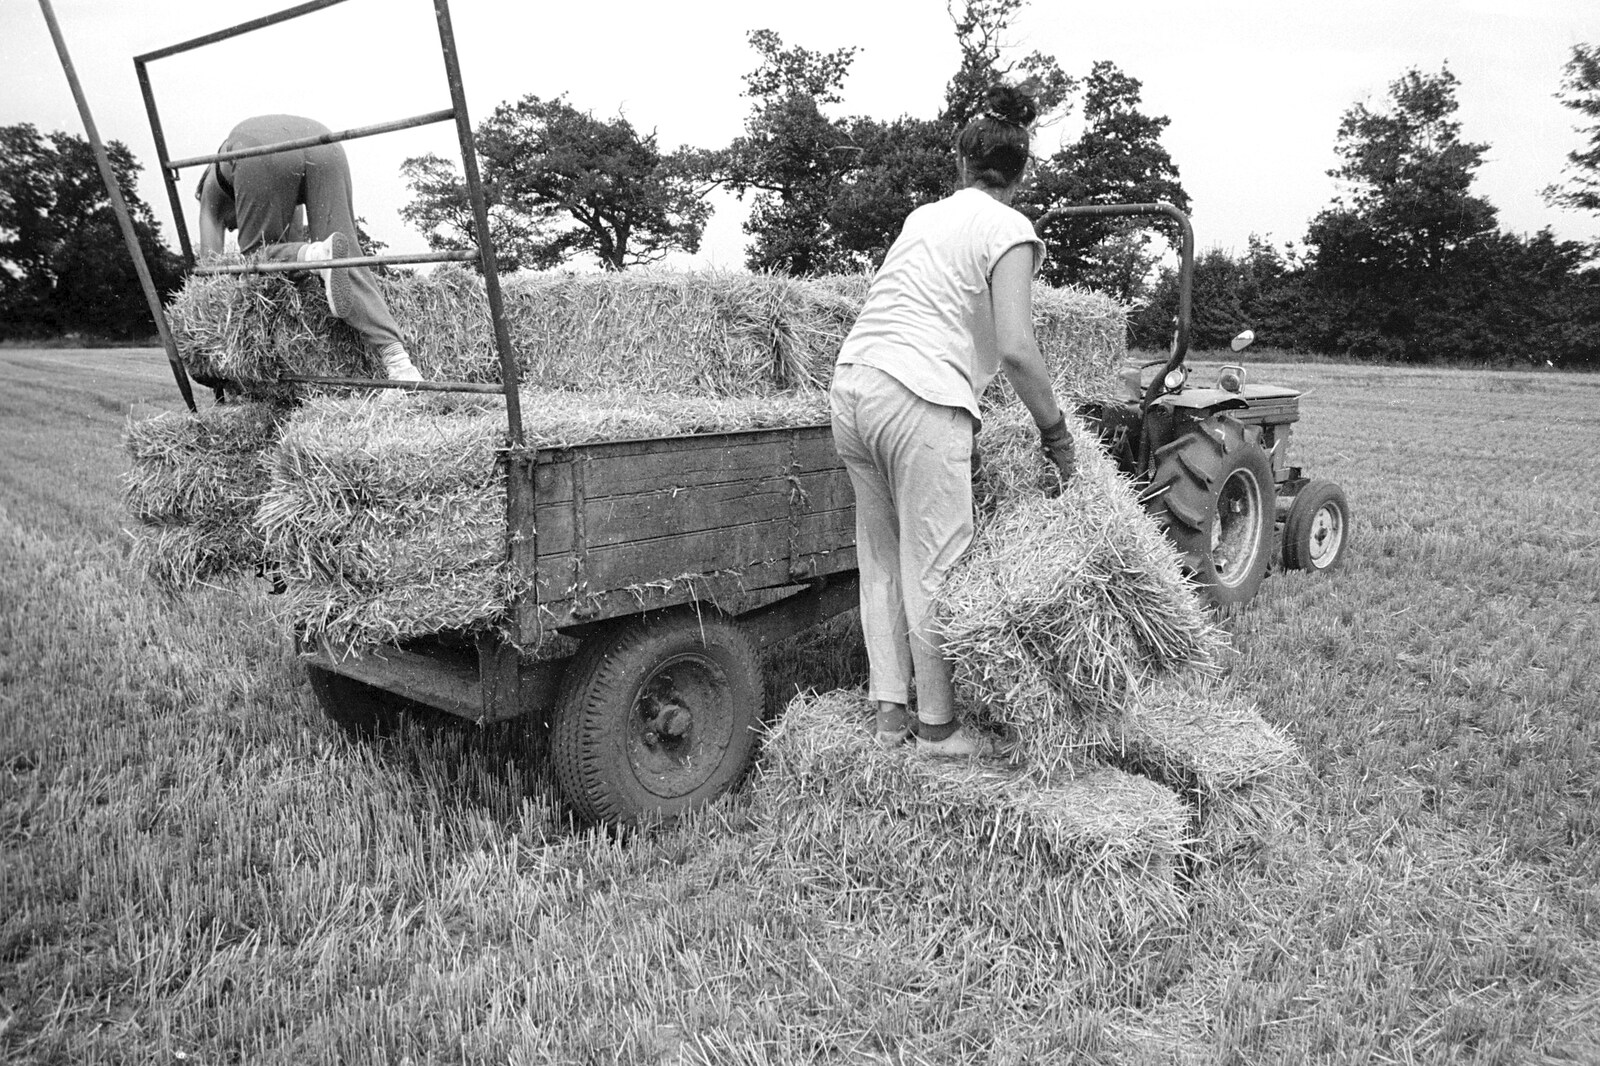 Rachel hauls a bale up from Working on the Harvest, Tibenham, Norfolk - 11th August 1992